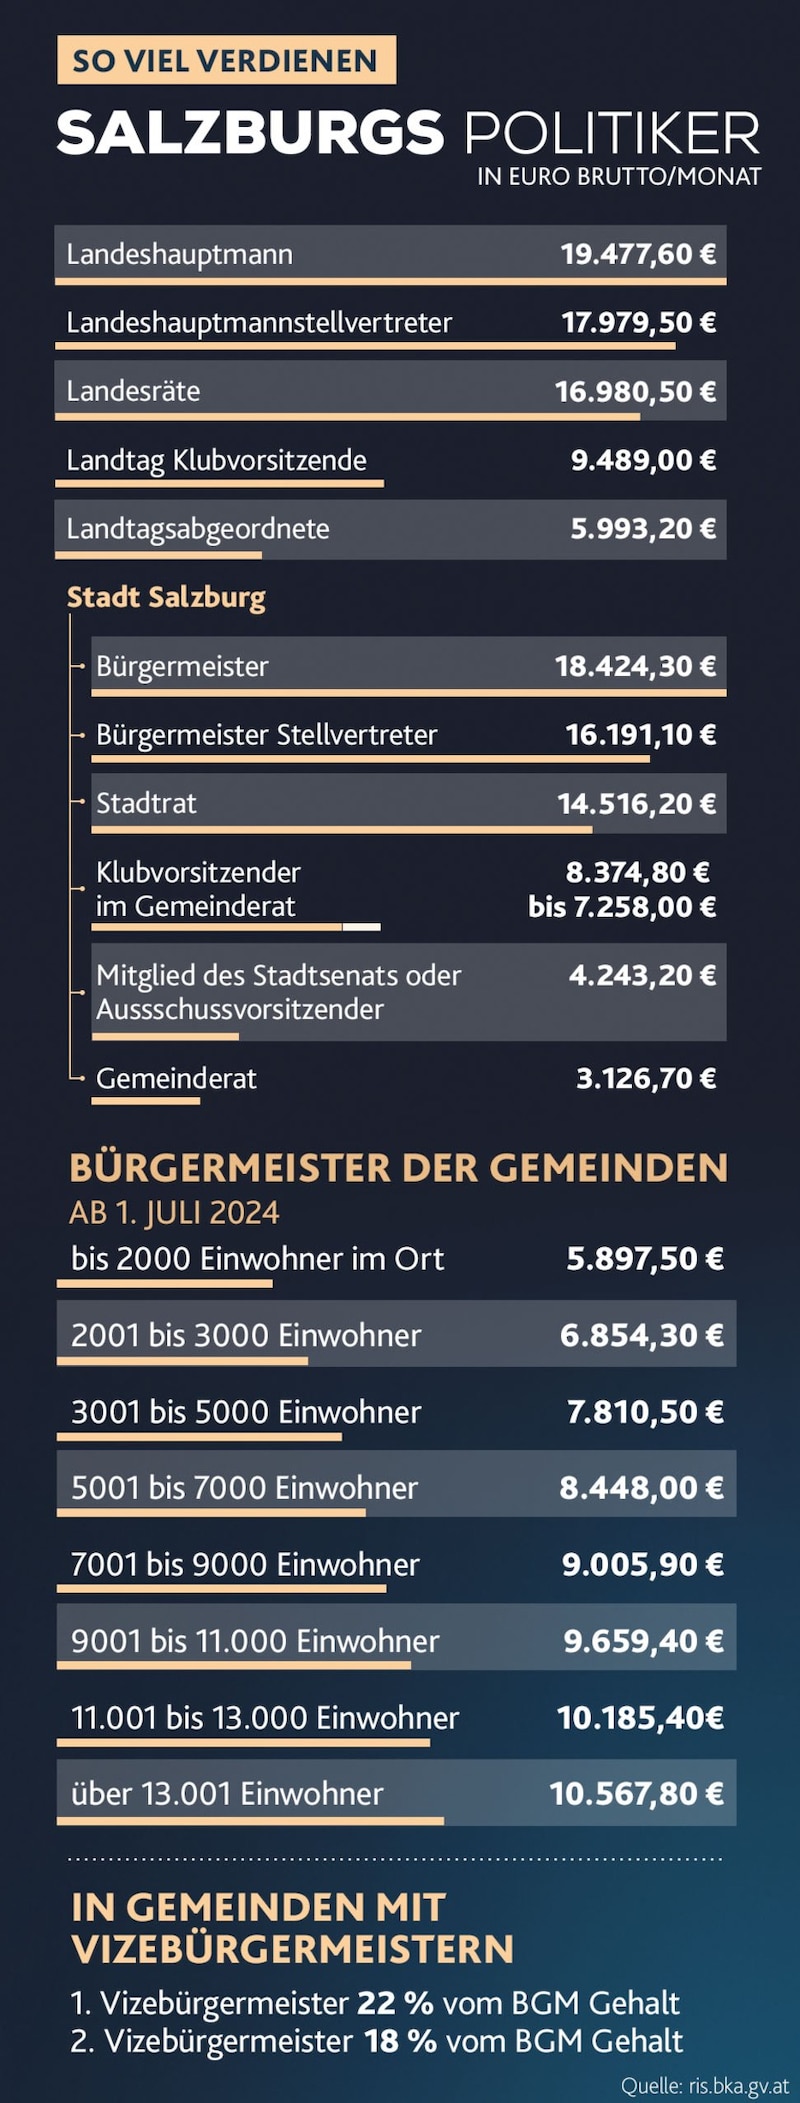 The overview: Salzburg's politicians' salaries at a glance. (Bild: Krone KREATIV/Adobe Stock)